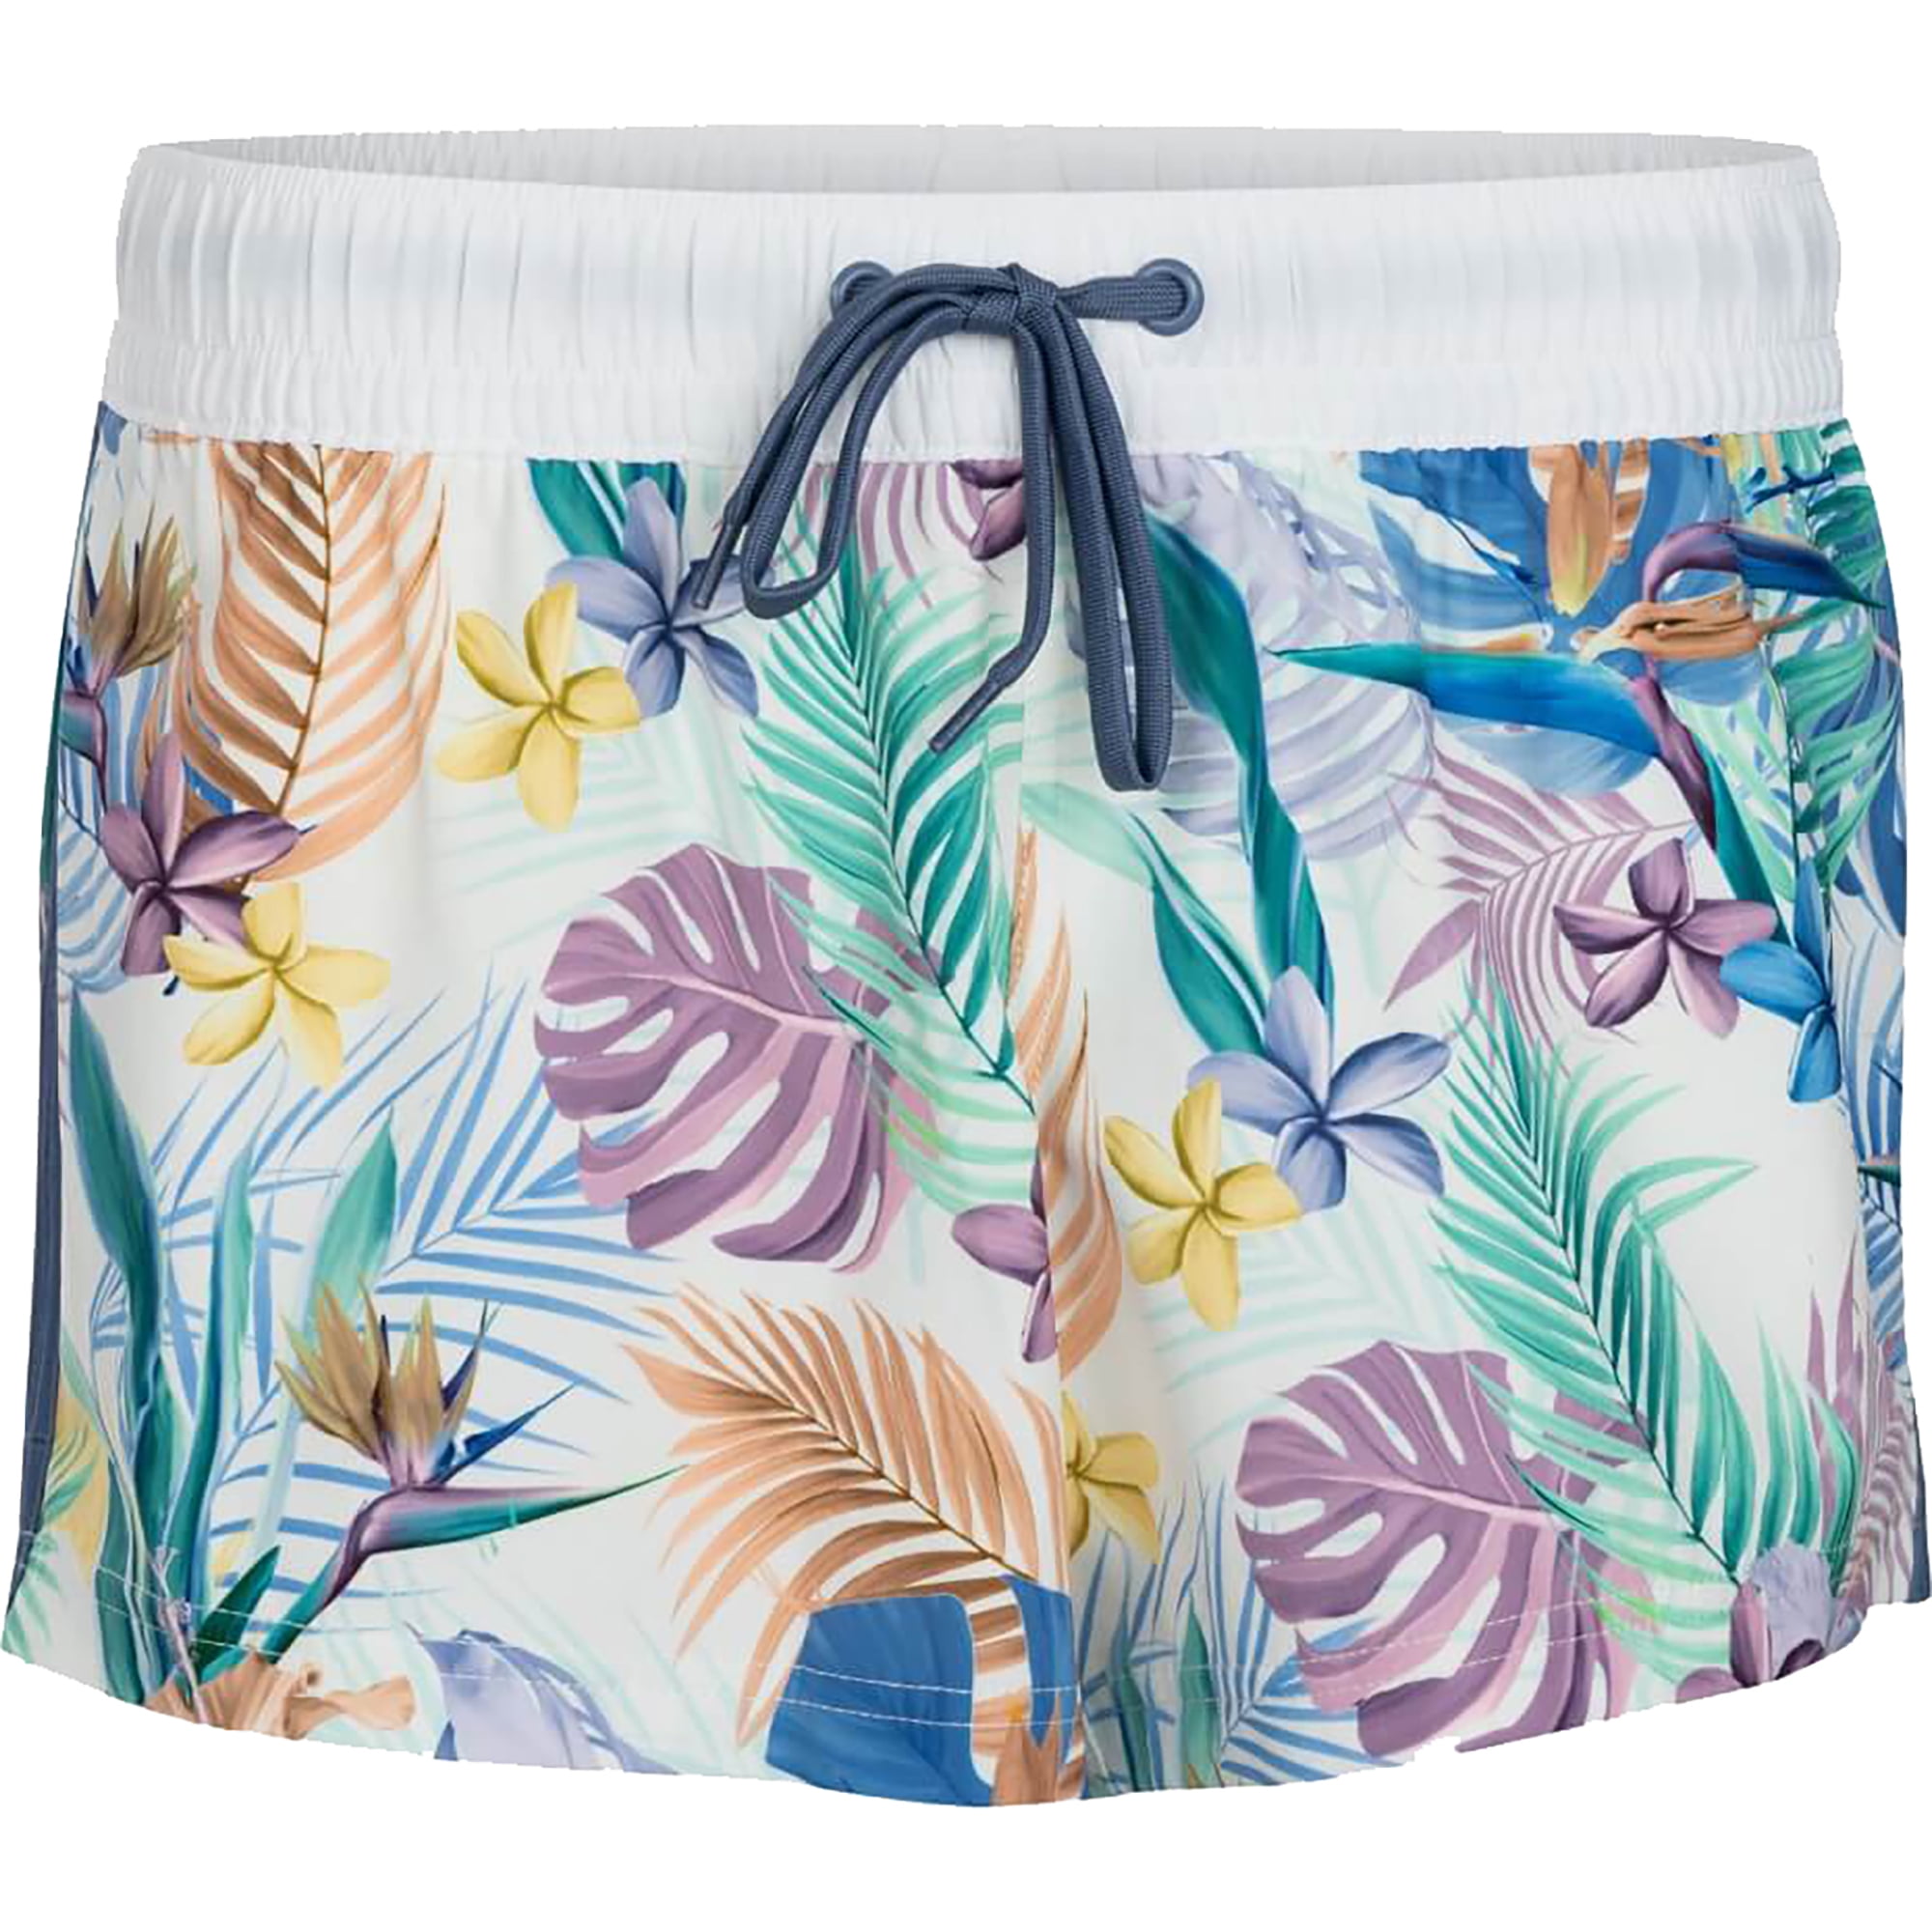 Reel Life Women's Marabella Tropical Explosion Sun Shorts - Small